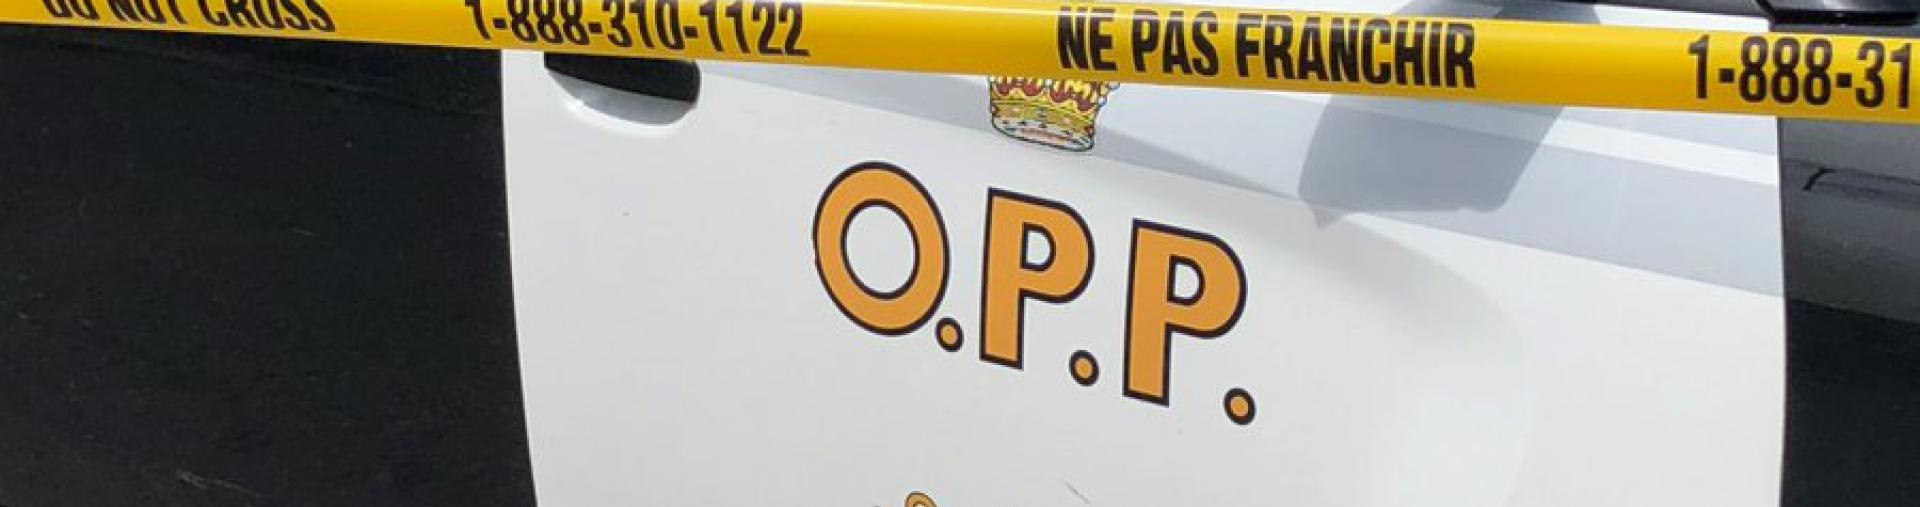 OPP cruiser and police tape